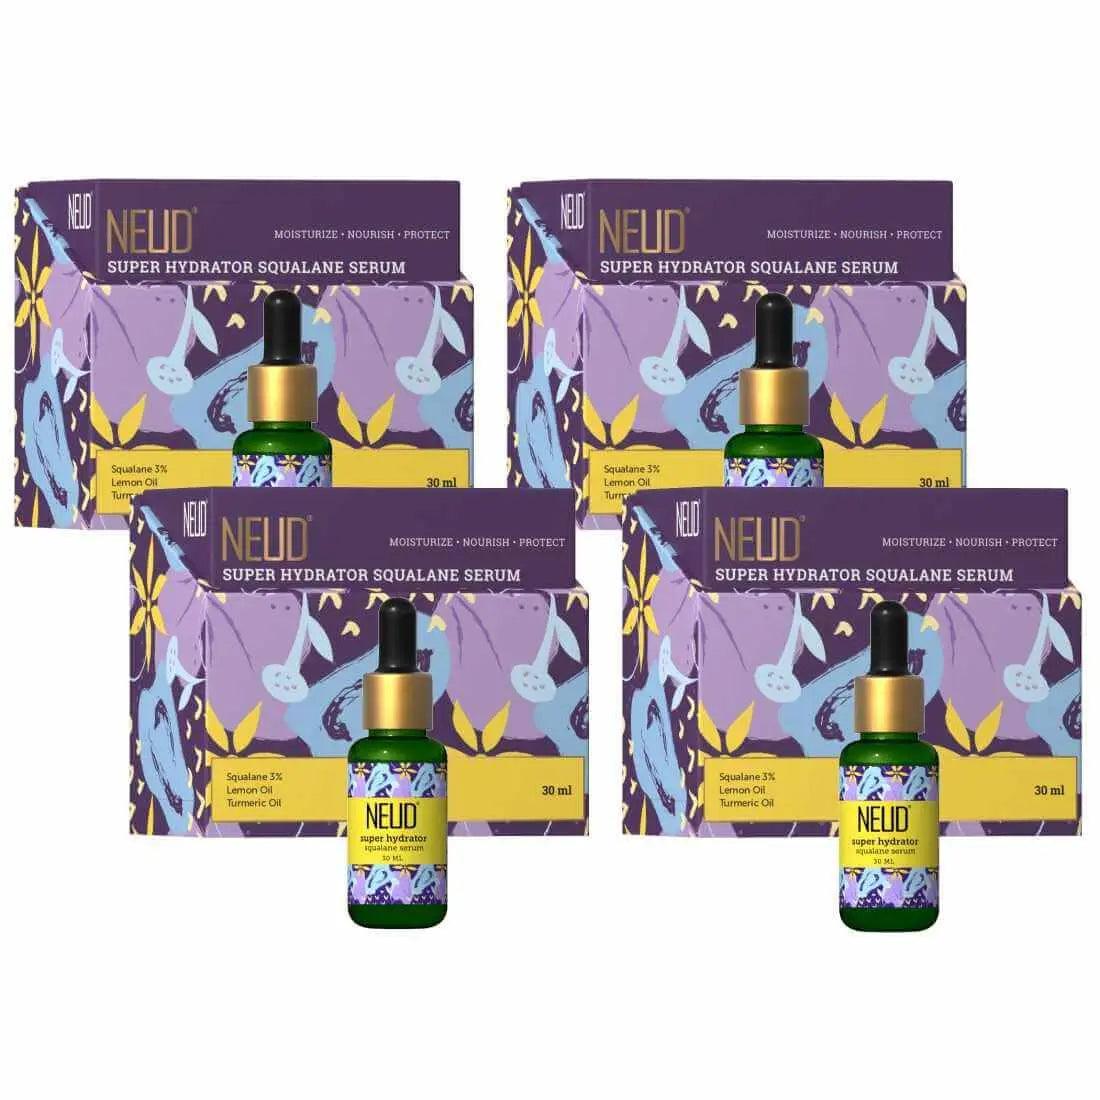 NEUD Super Hydrator Squalane Serum With Lemon Oil, Turmeric Oil & Reverskin - 30 ml 9559682311818